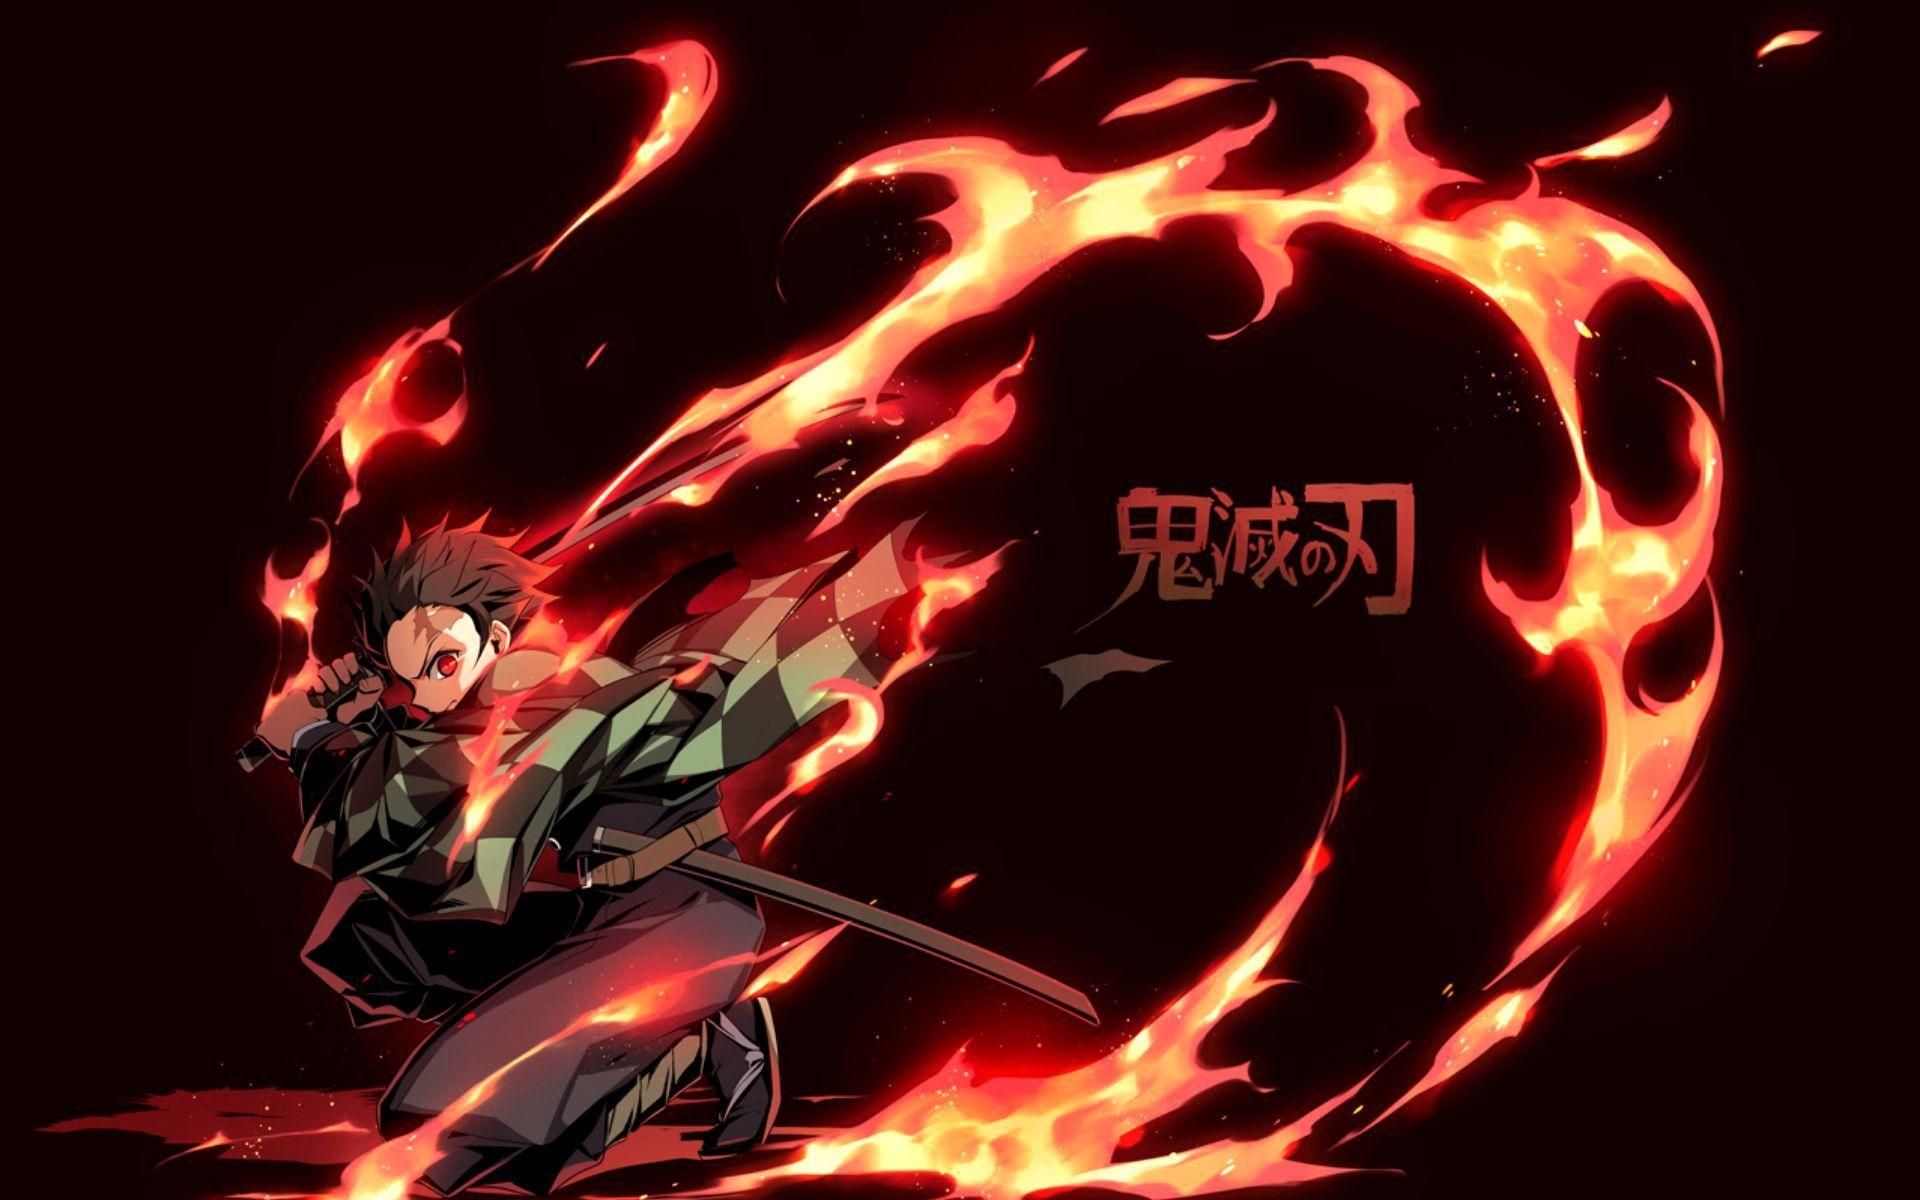 Download Demon Slayer wallpaper by icekingcold  53  Free on ZEDGE now  Browse millions of popula  Japanisches kunstwerk Anime  hintergrundbilder Anime figuren